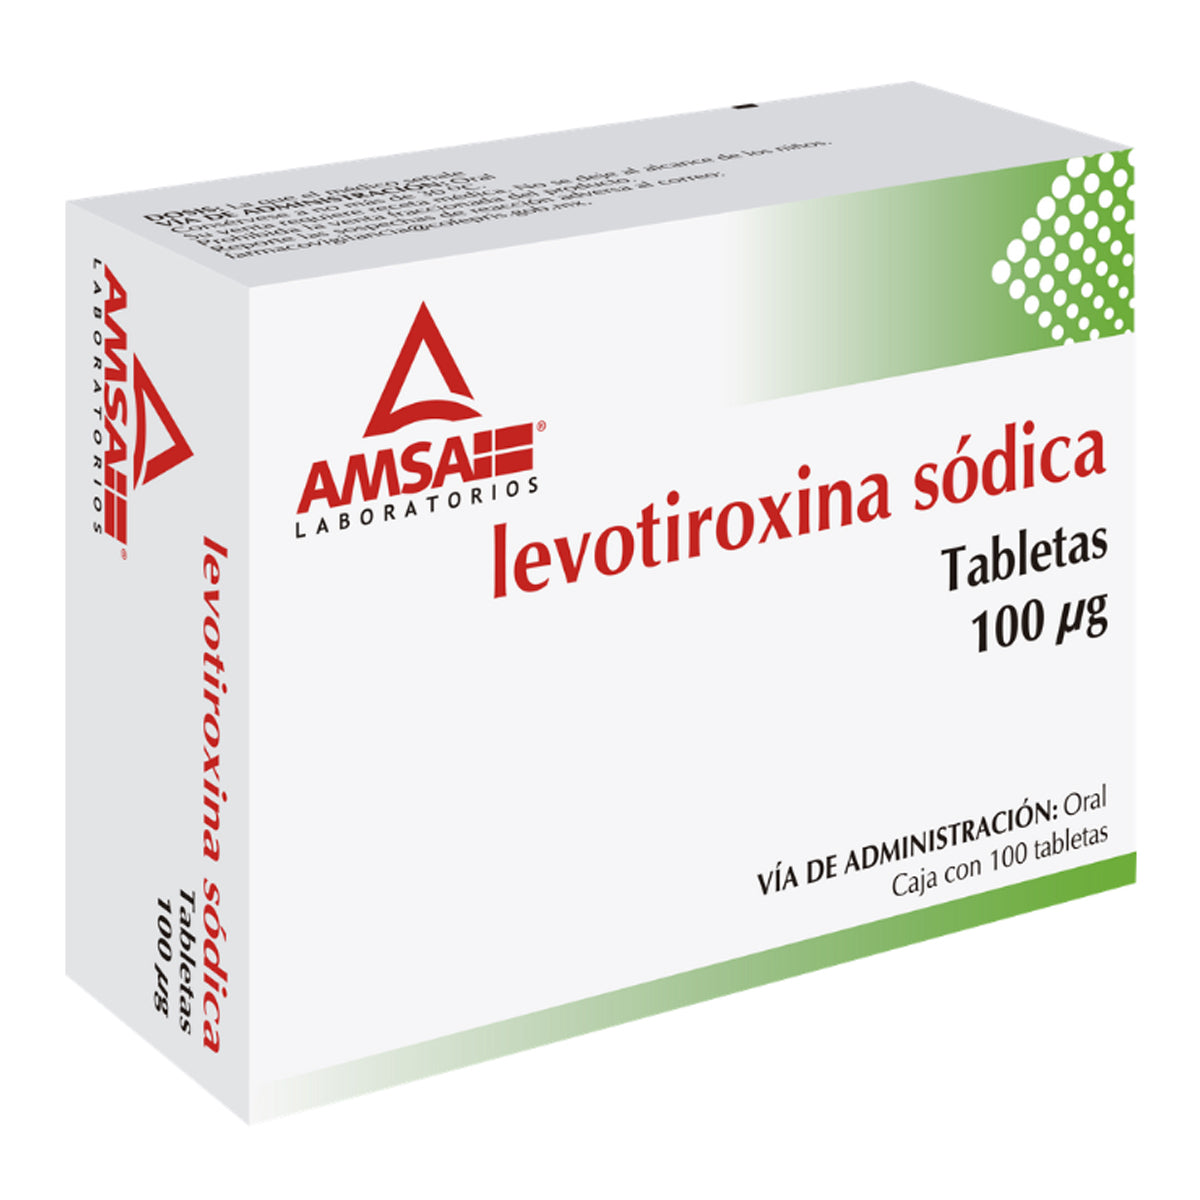 Levotiroxina 100mcg oral, 100 tabletas. Marca AMSA – Vitialife